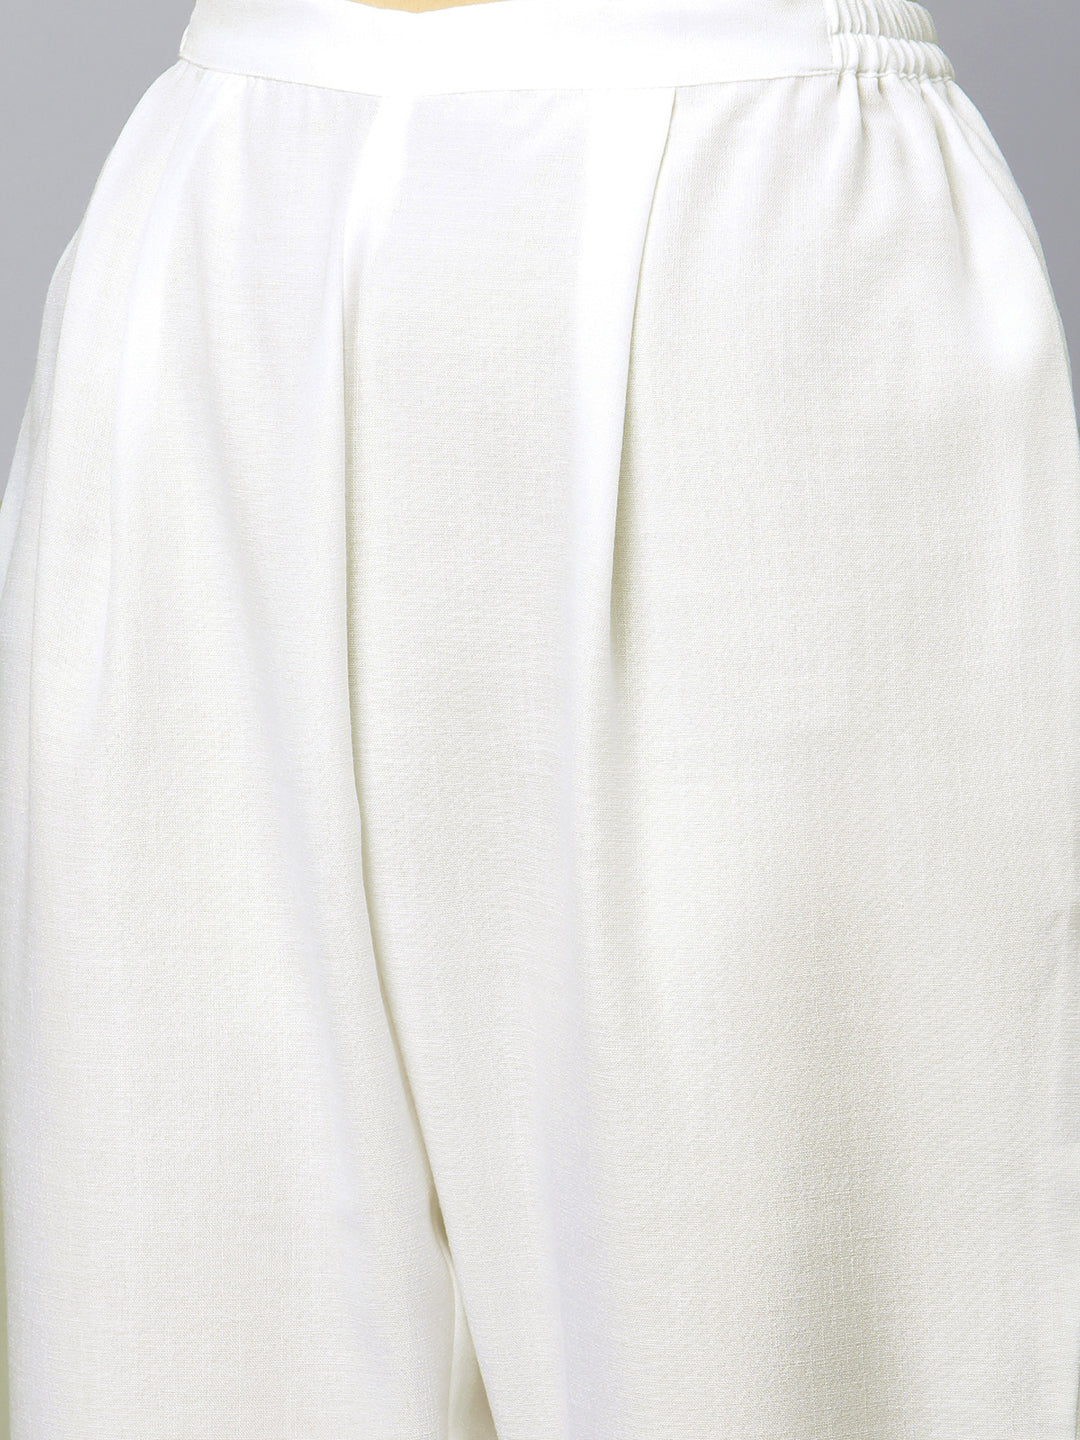 Women's Off White Cotton Printed Asymmetric Kurta Palazzo Set - Ahalyaa